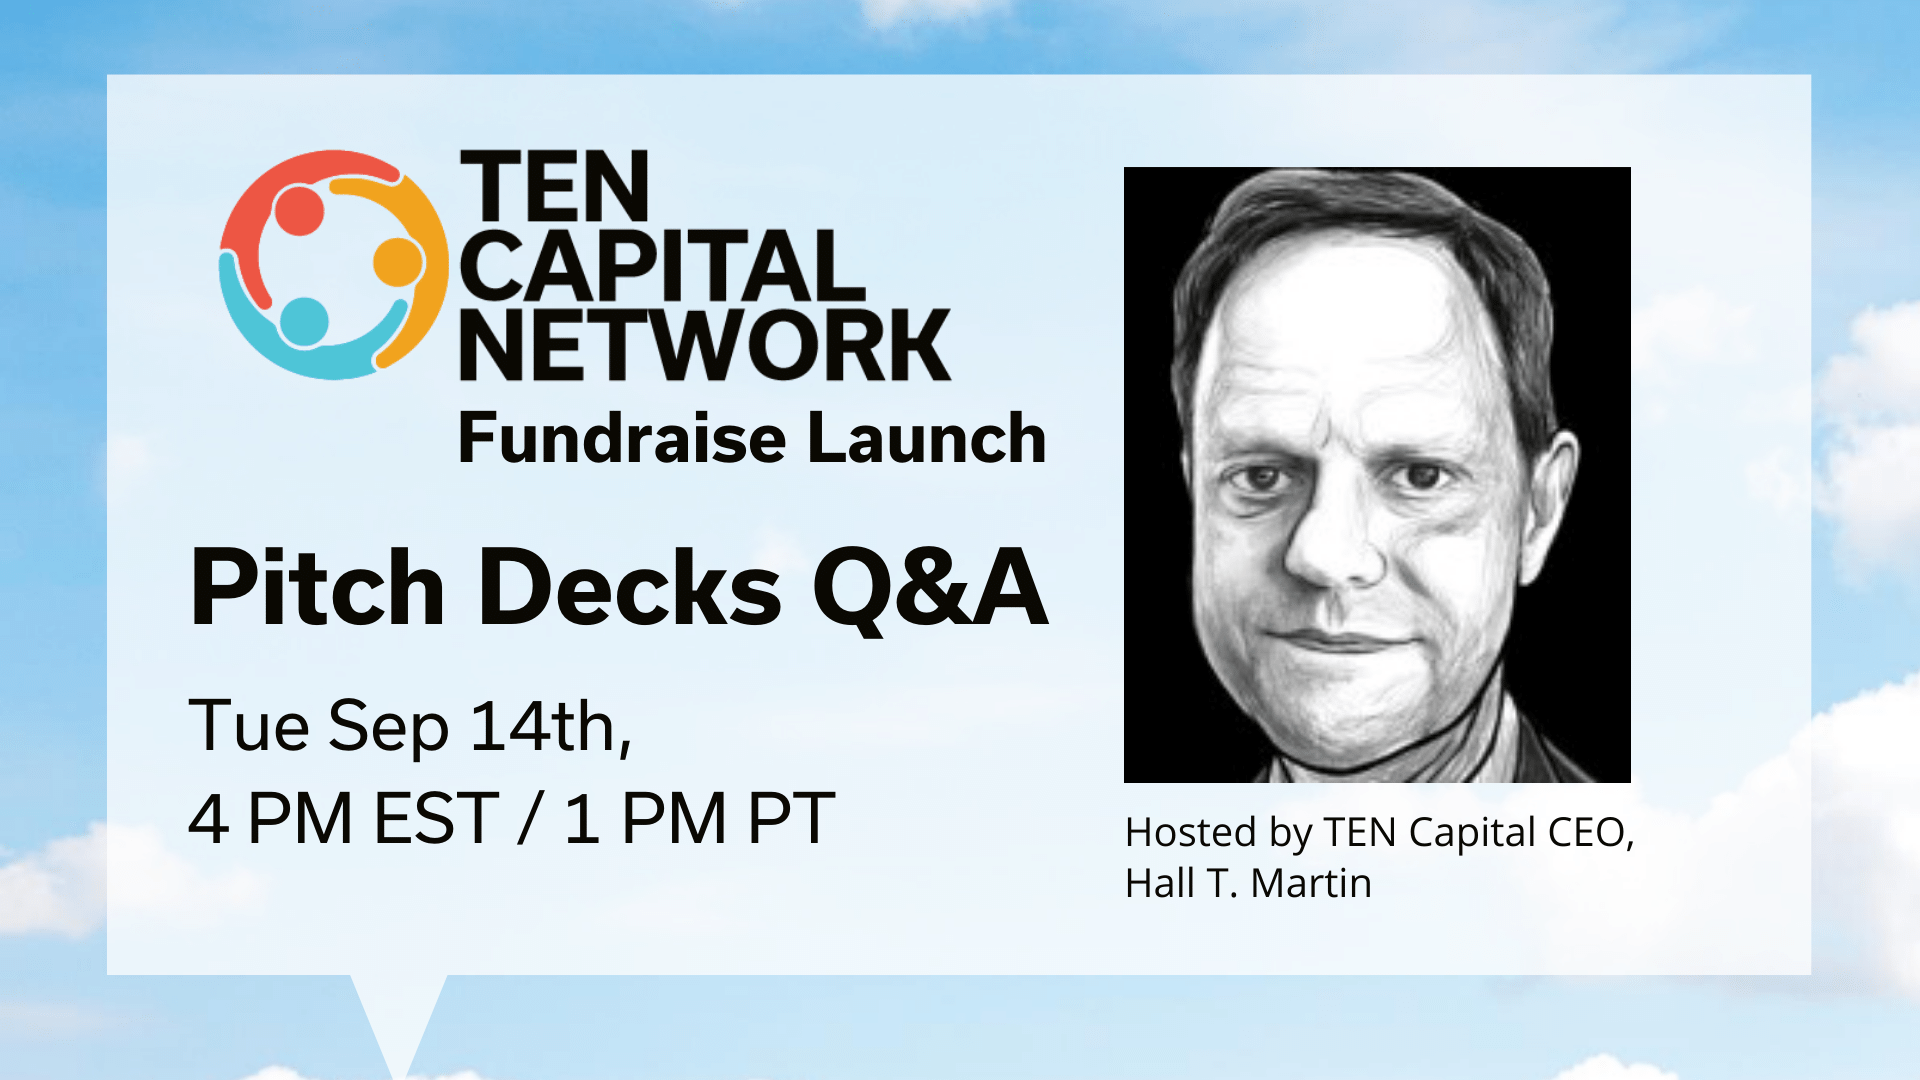 TEN Capital Fundraise Launch Program: Pitch Decks Q&A